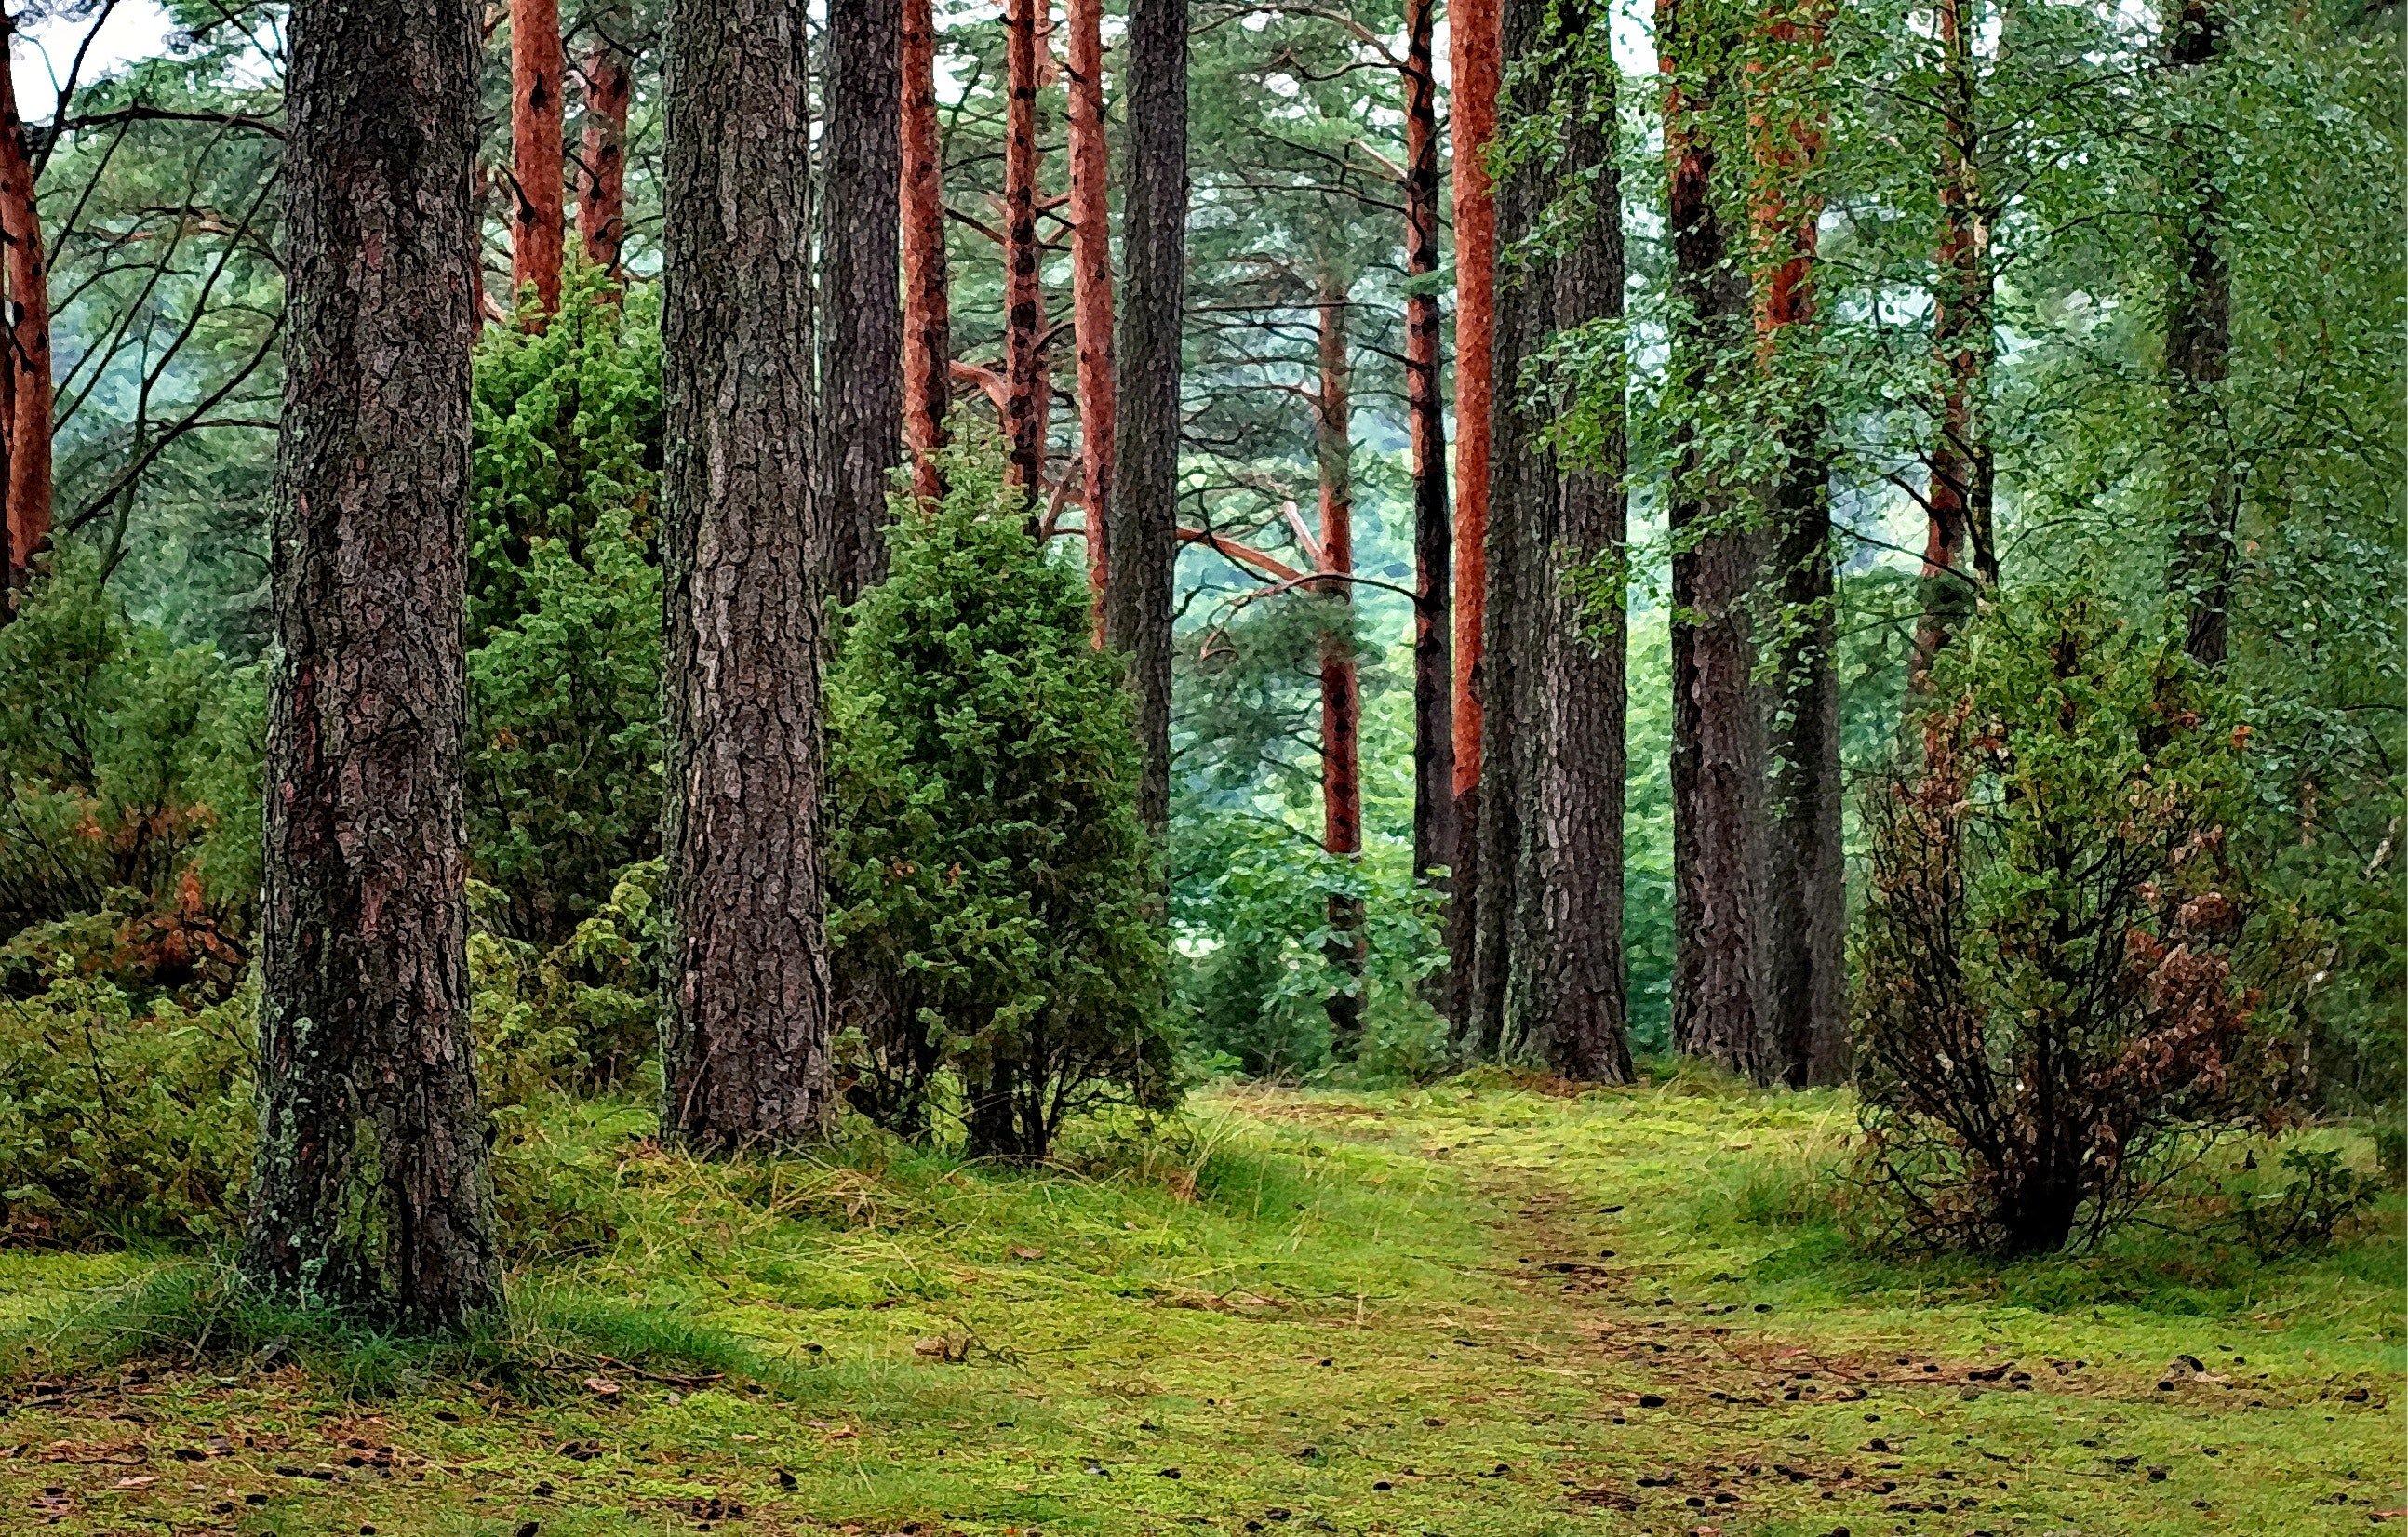 Üppiger Wald. | Quelle: Pexels/Pixabay